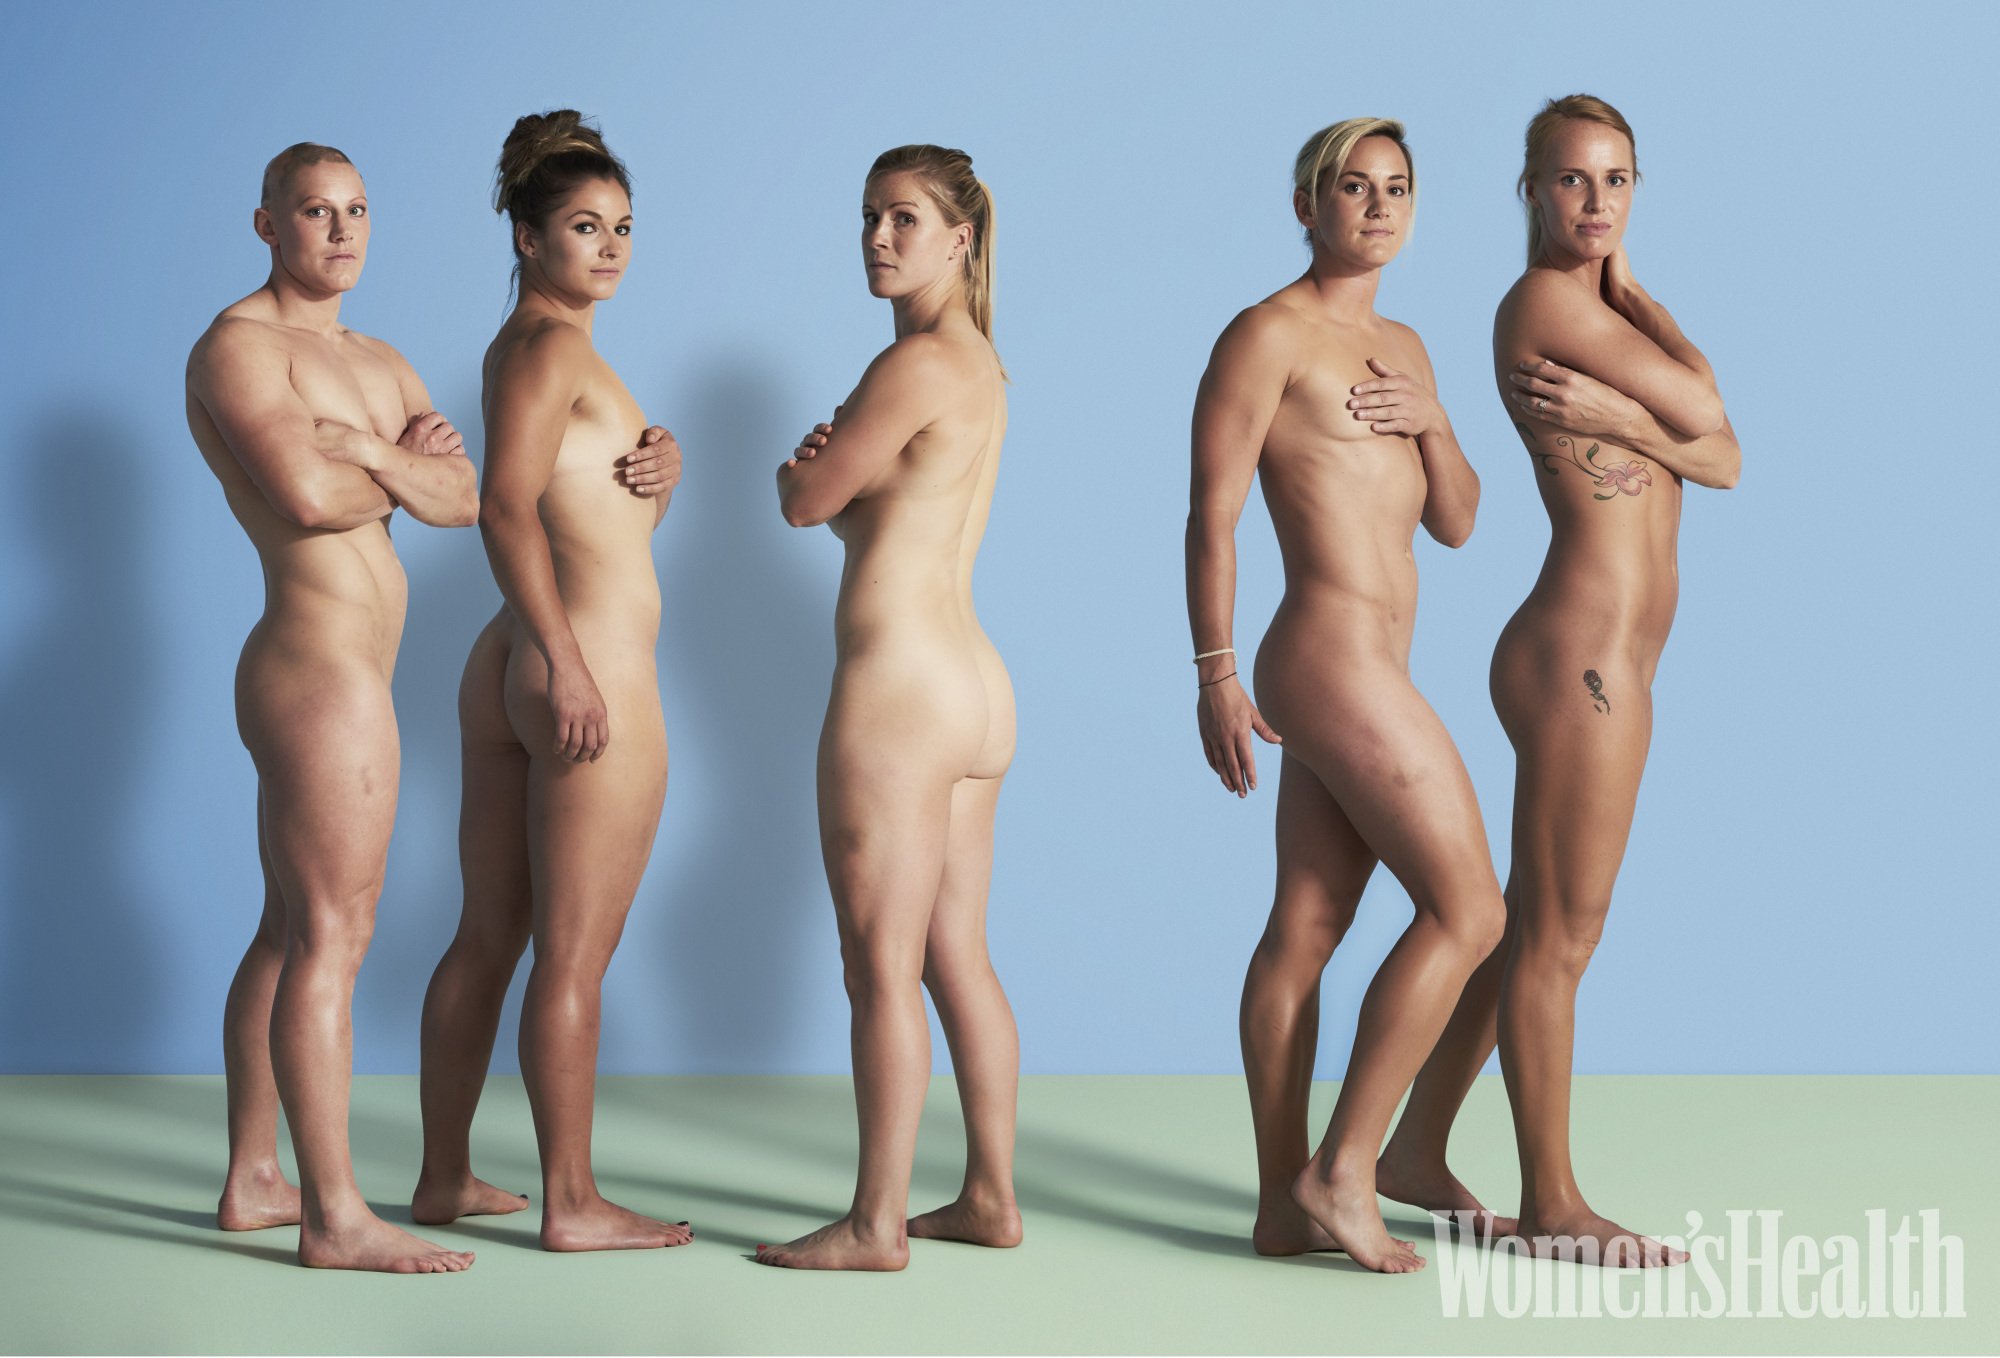 ali aladawi share women athletes nude photos